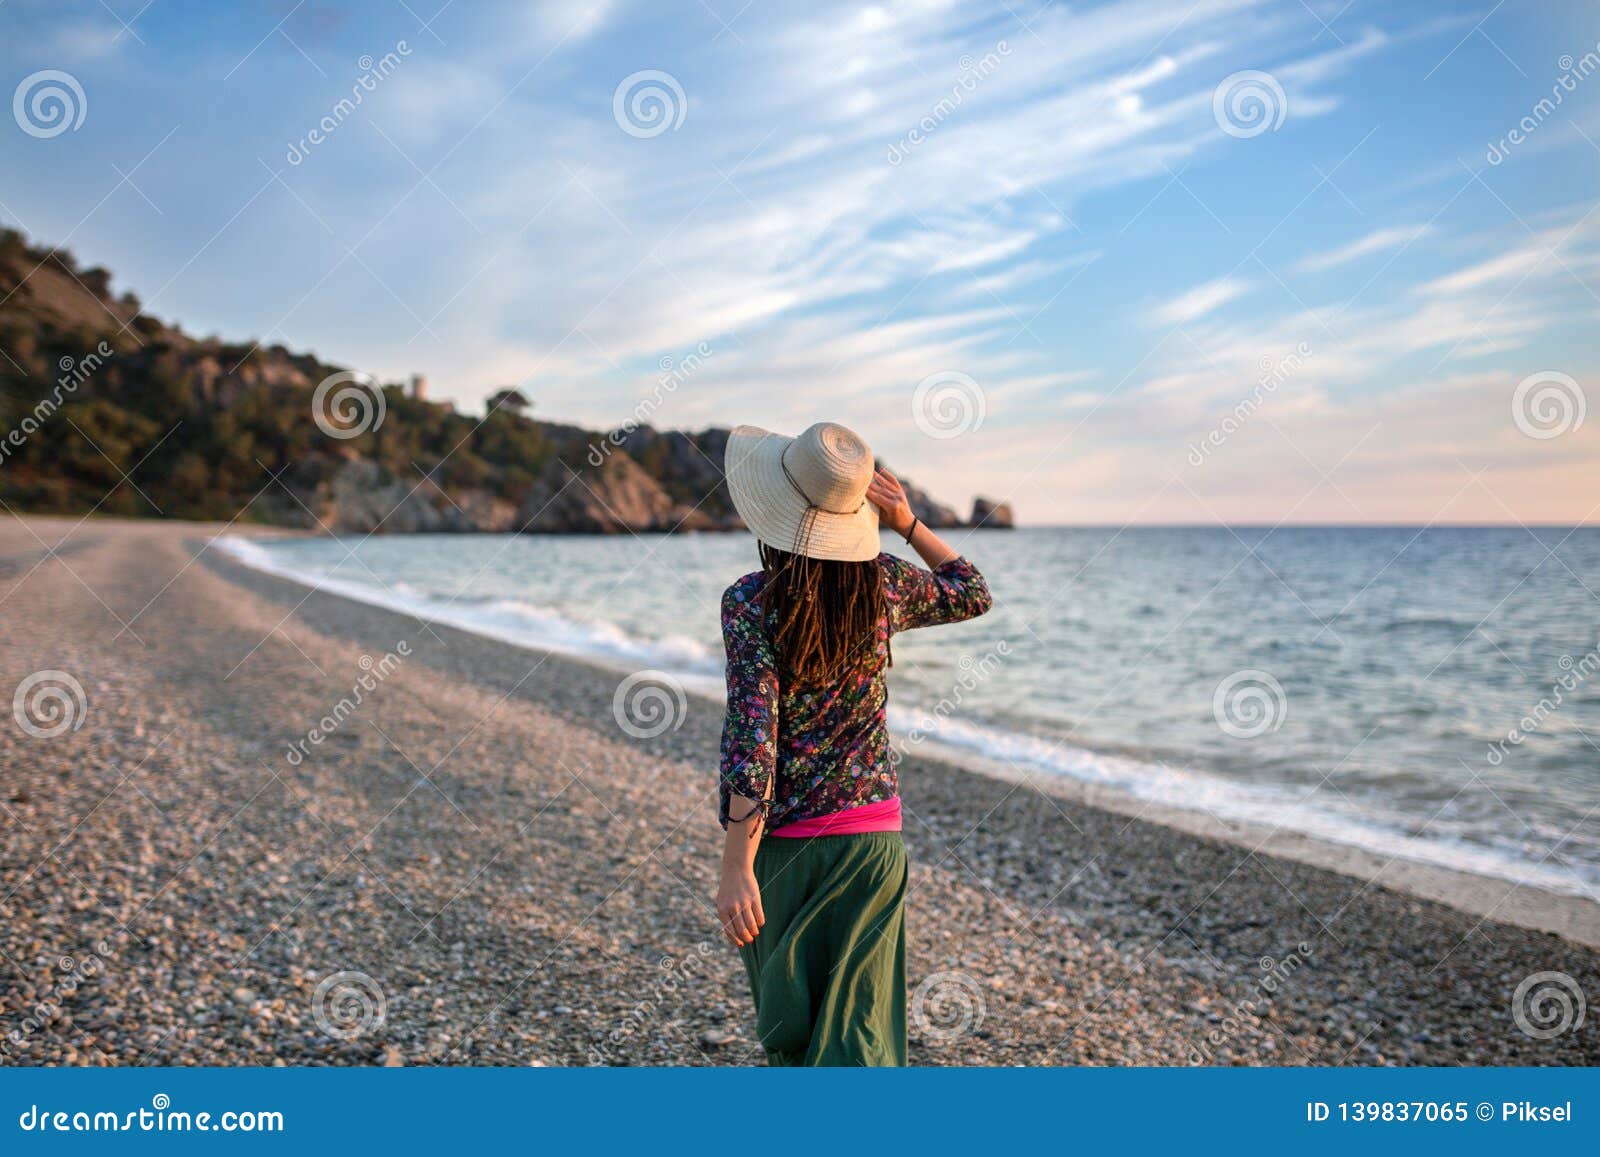 young woman walking on the beach, cala del caÃÂ±uelo, andalusia